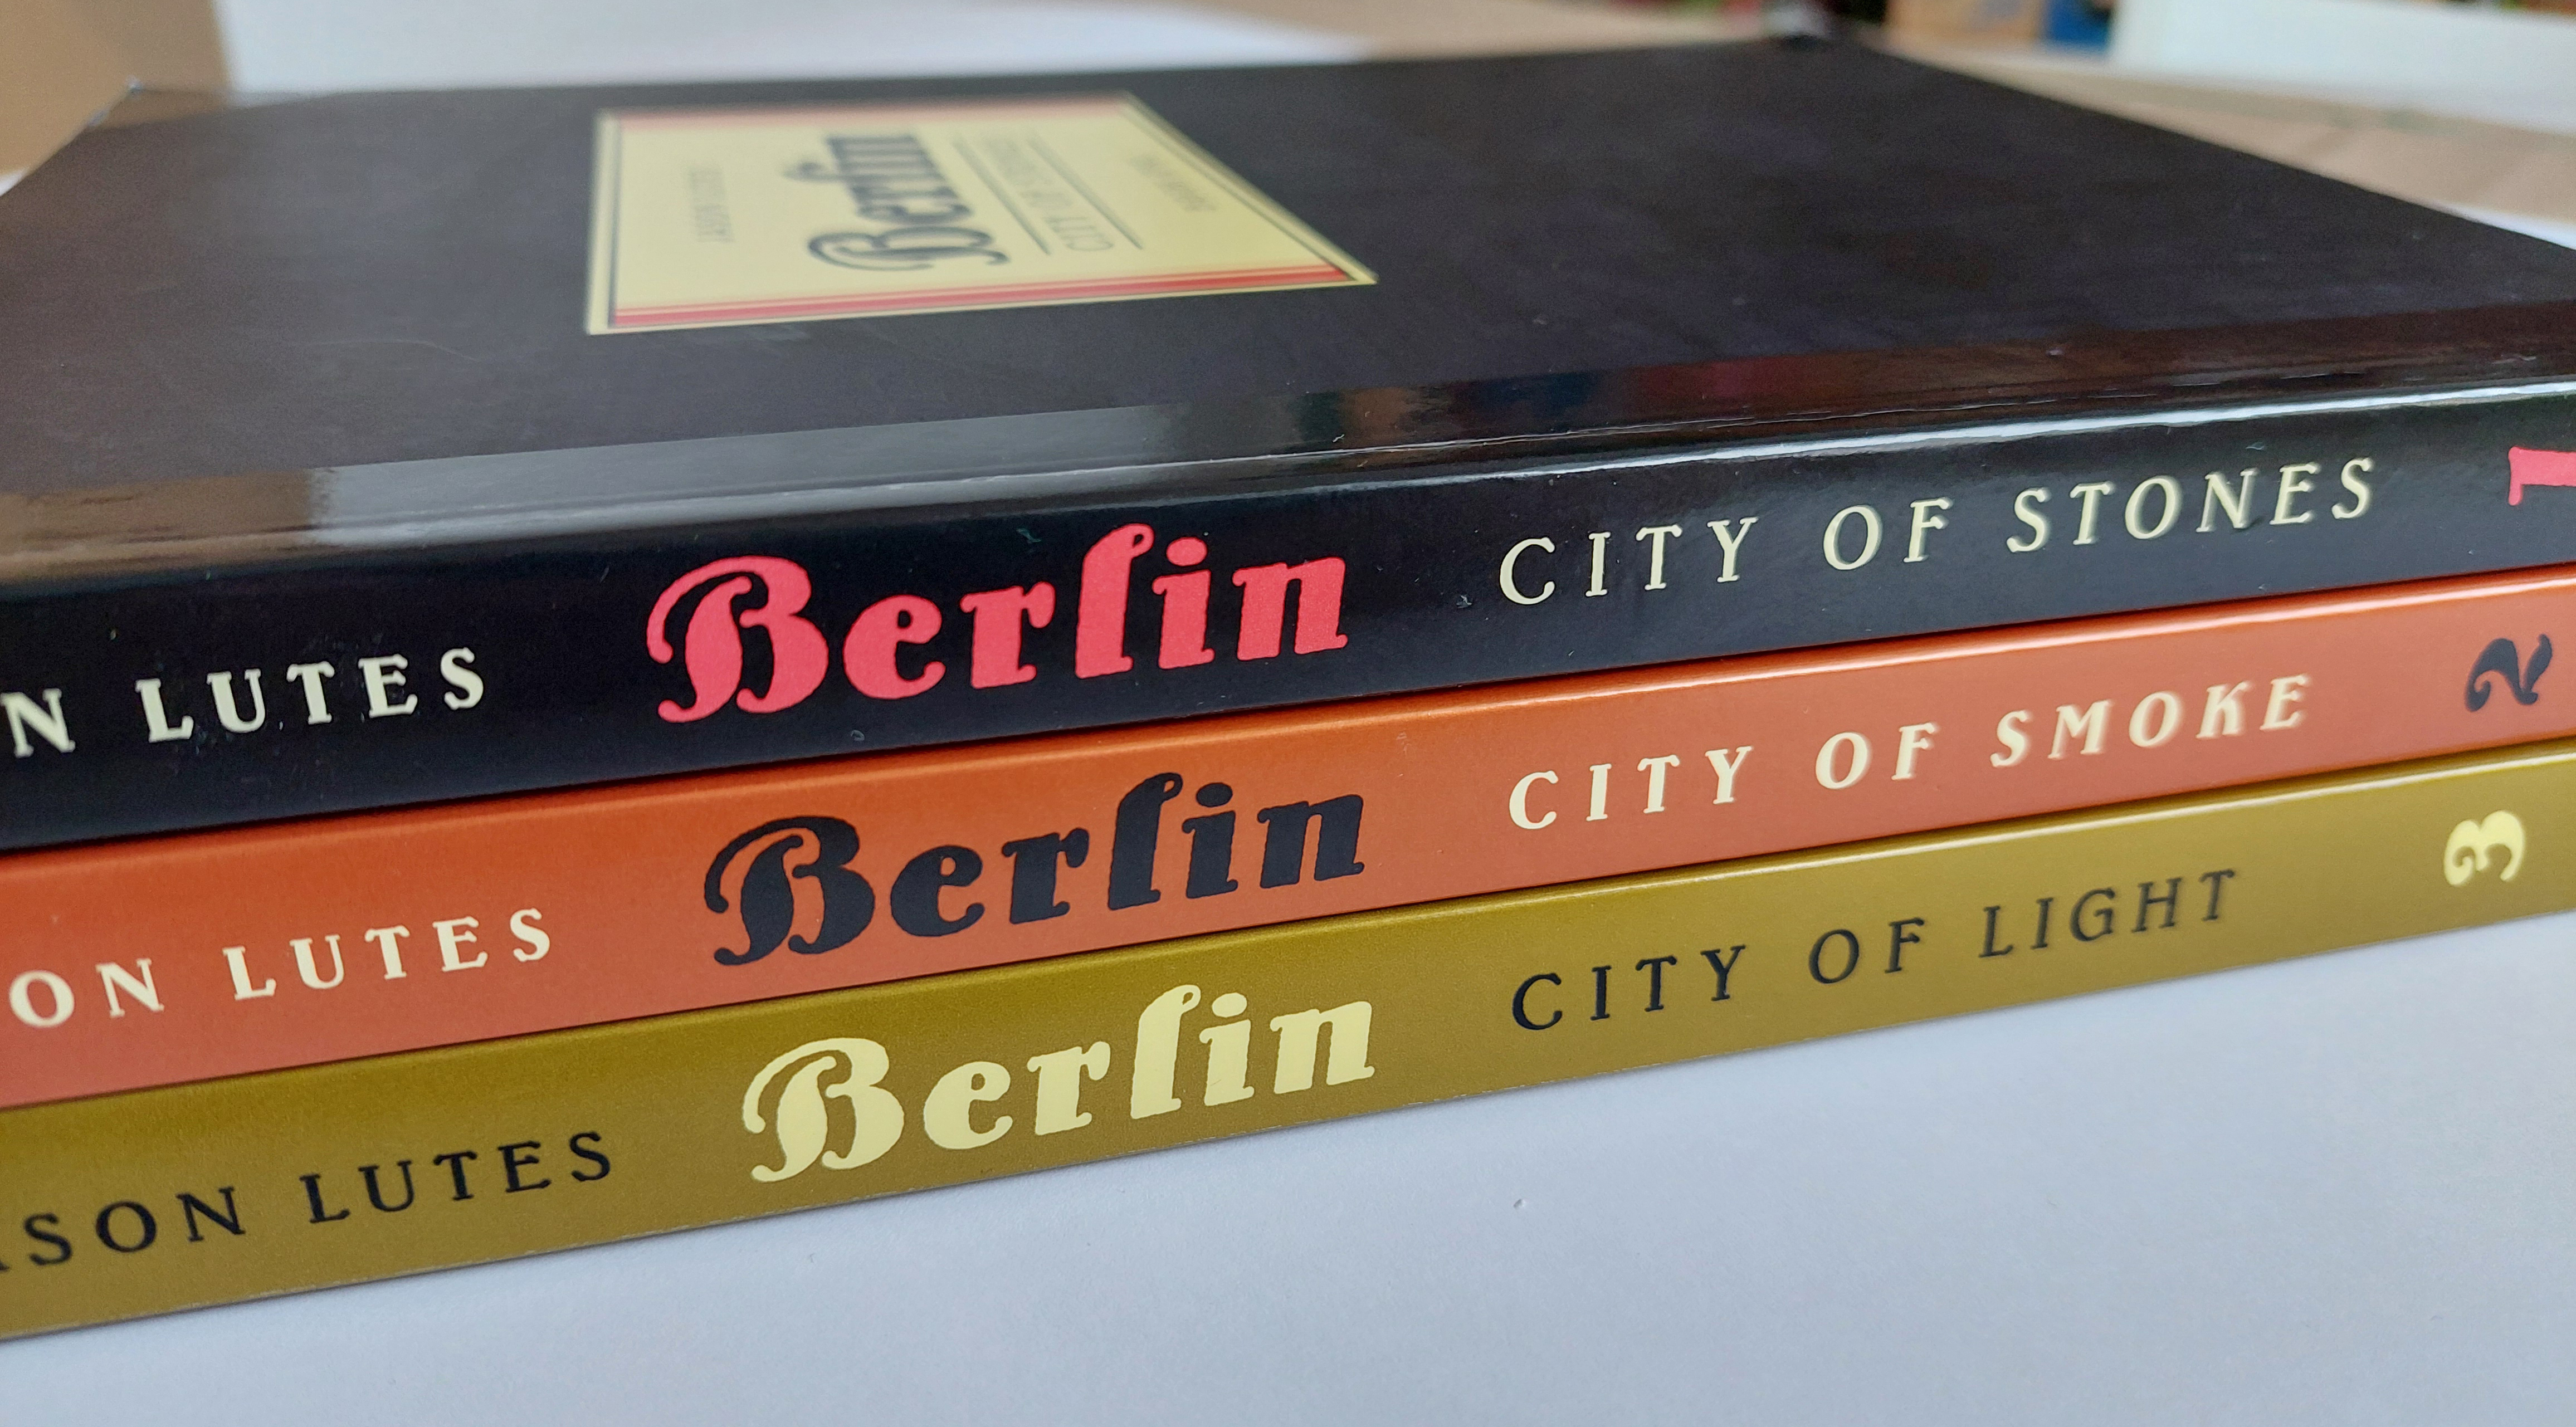 History repeats itself, as seen in “Berlin: City of Light”